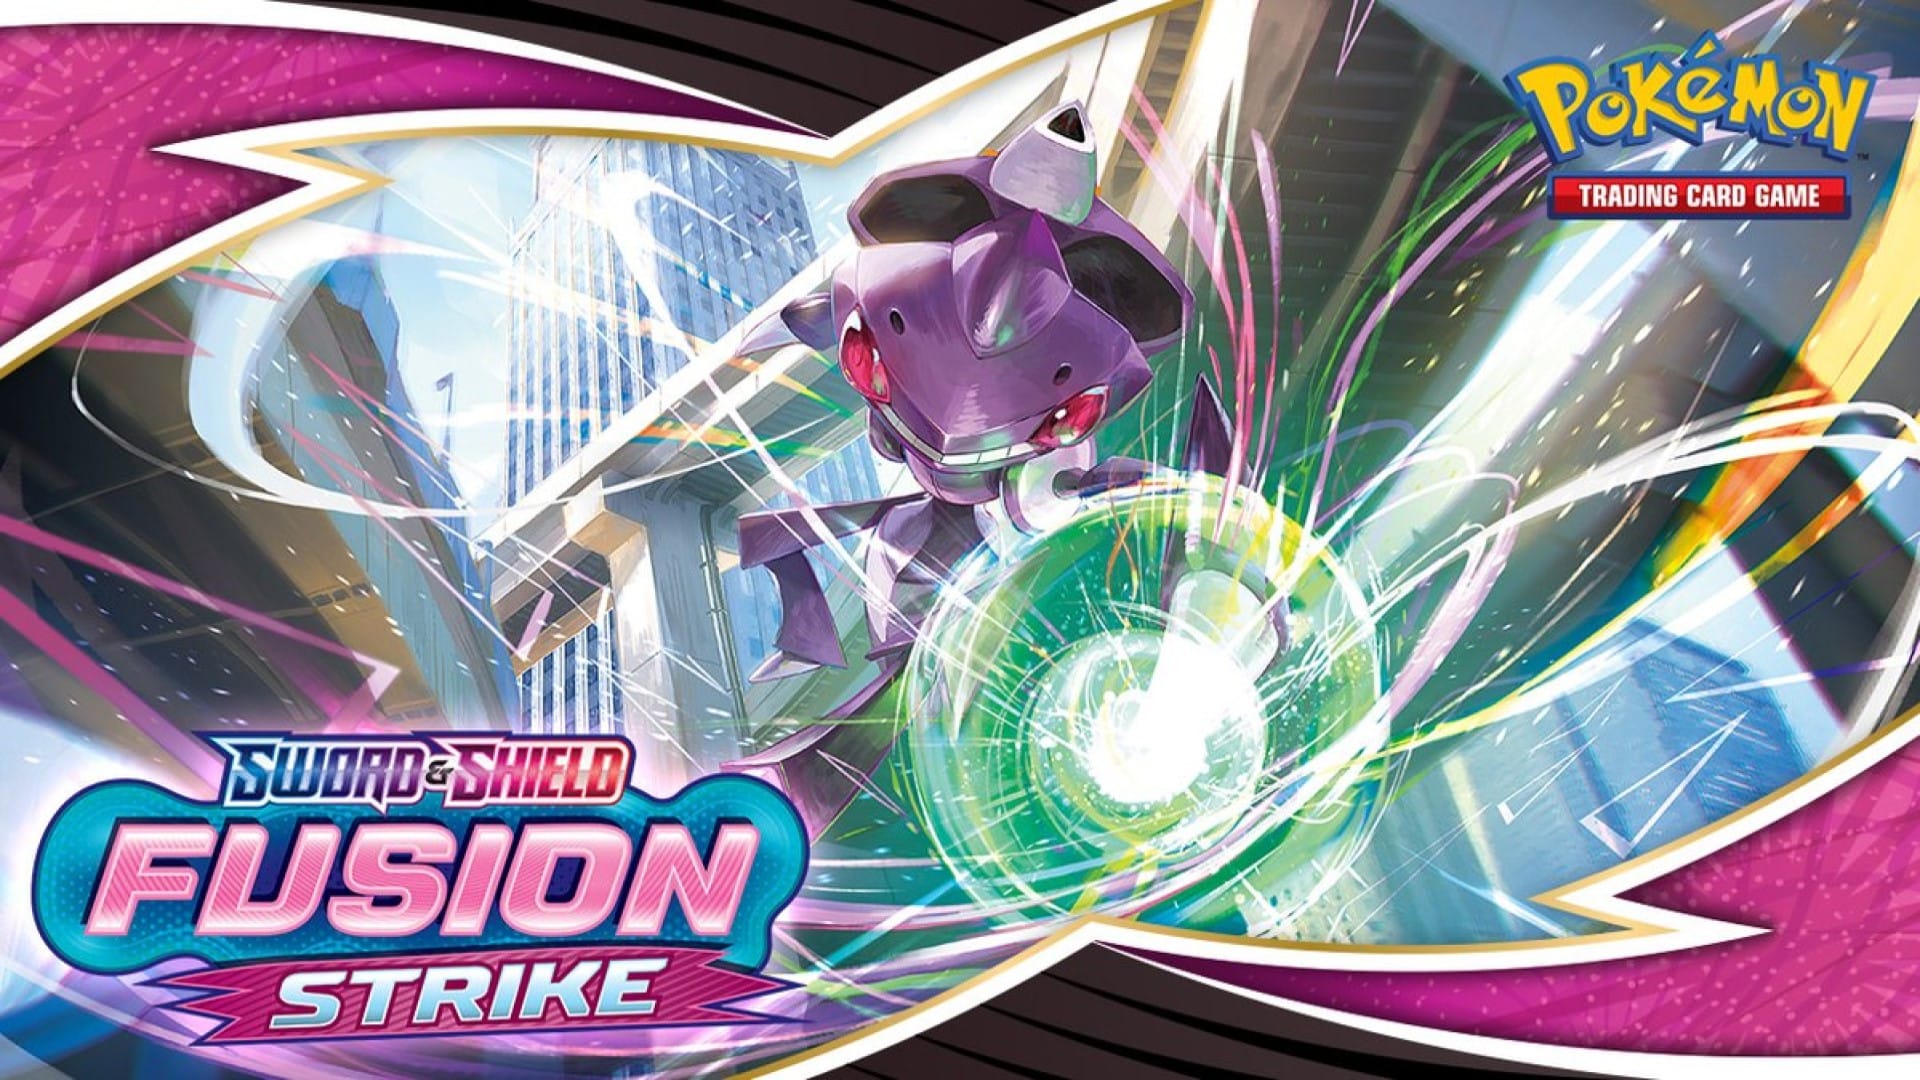 Official Pokemon TCG artwork for the Fusion Strike set